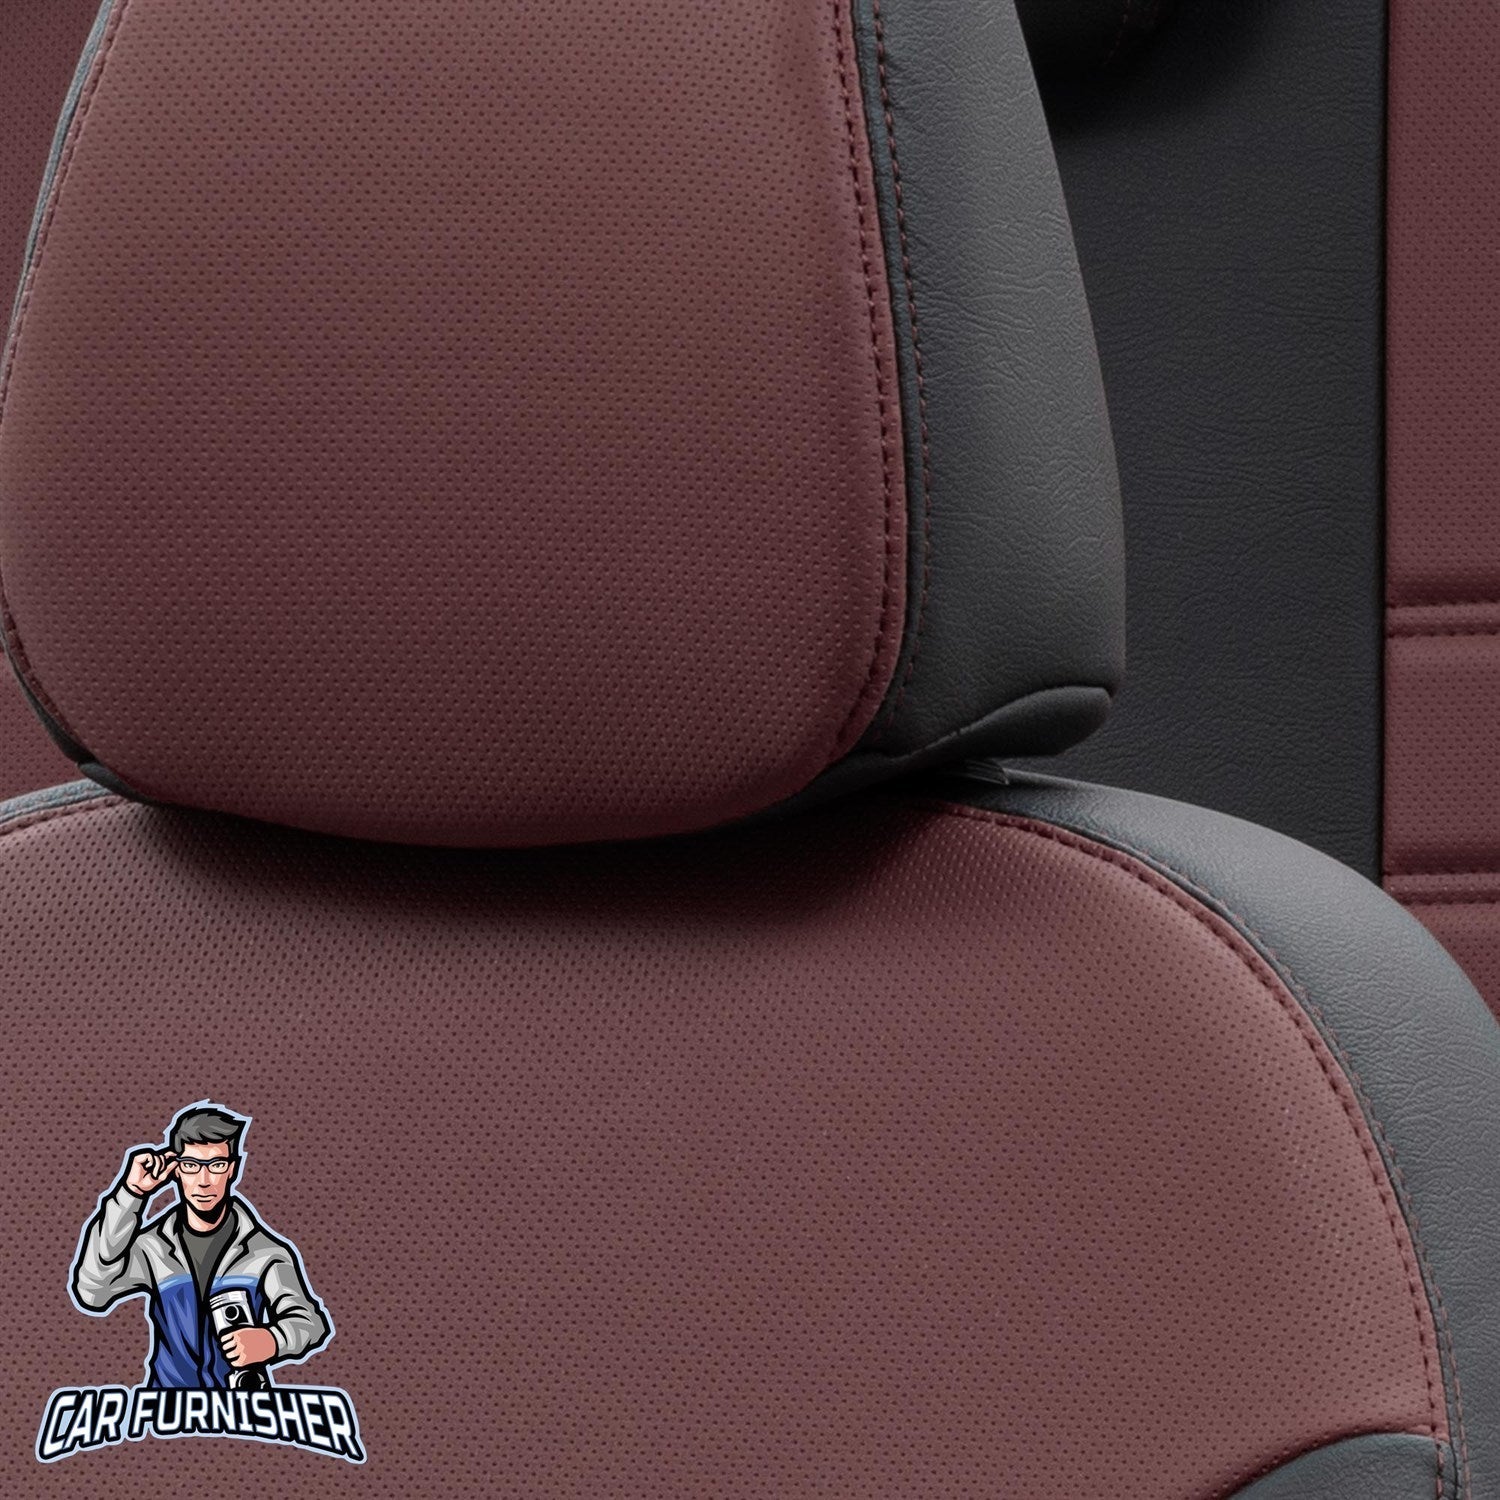 Skoda Citigo Seat Covers Istanbul Leather Design Burgundy Leather